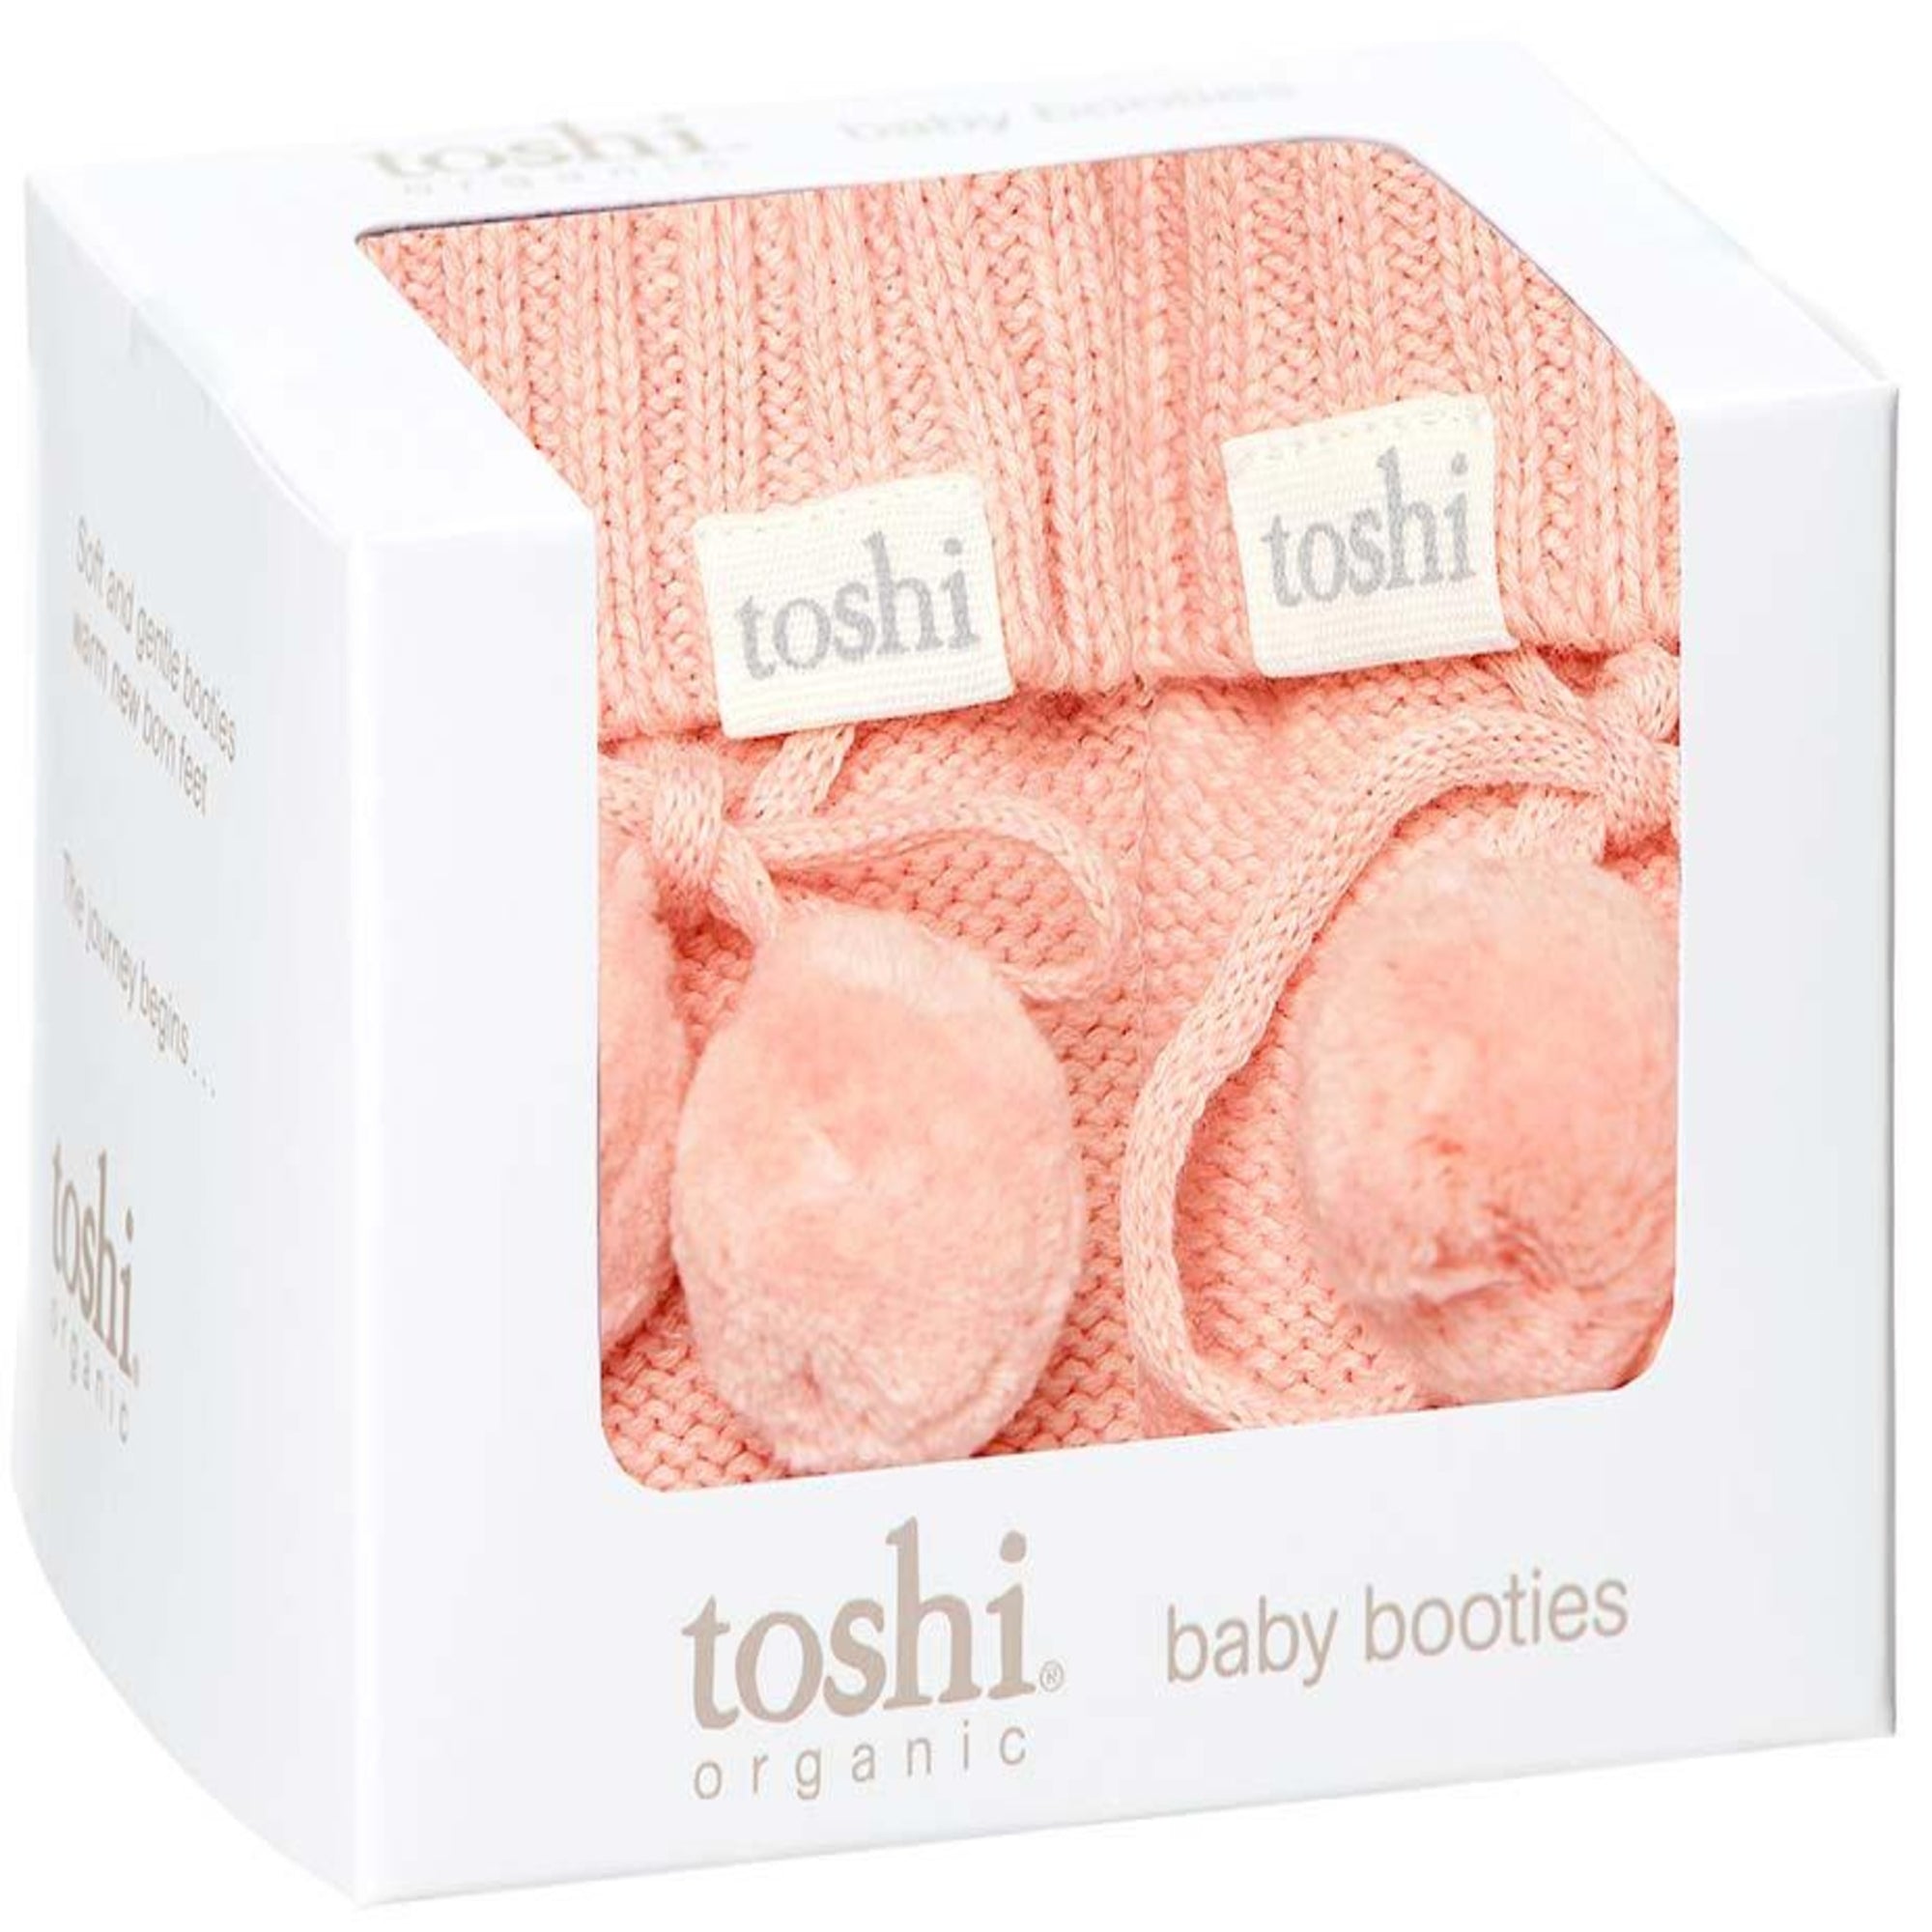 Toshi Organic Booties Marley-Blossom